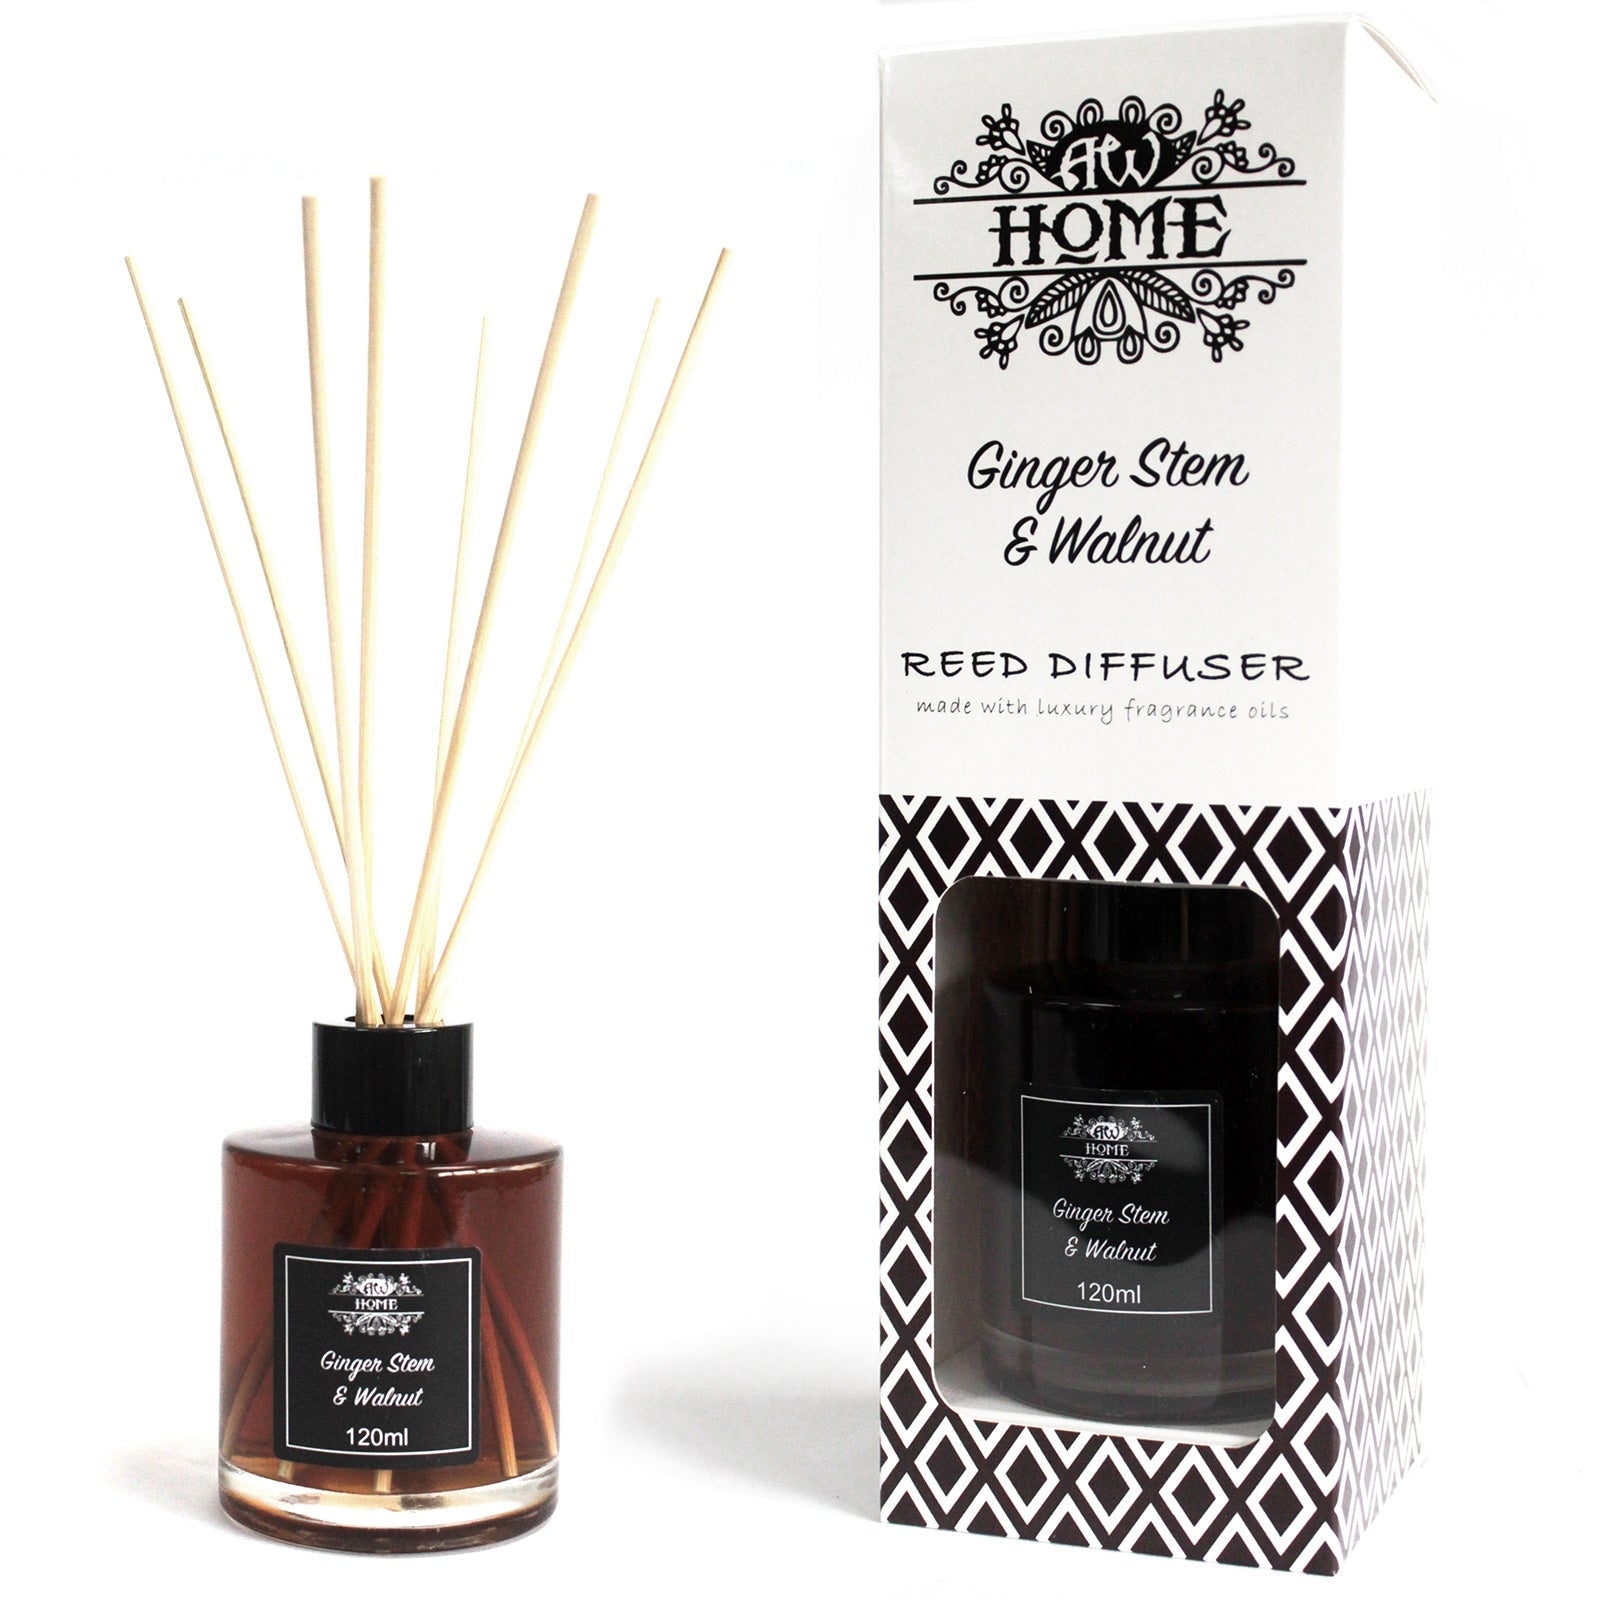 Home Fragrance Reed Diffuser - Various Fragrances - 120ml Home Fragrance Reed Diffusers - 120ml Soul Inspired Ginger Stem & Walnut 